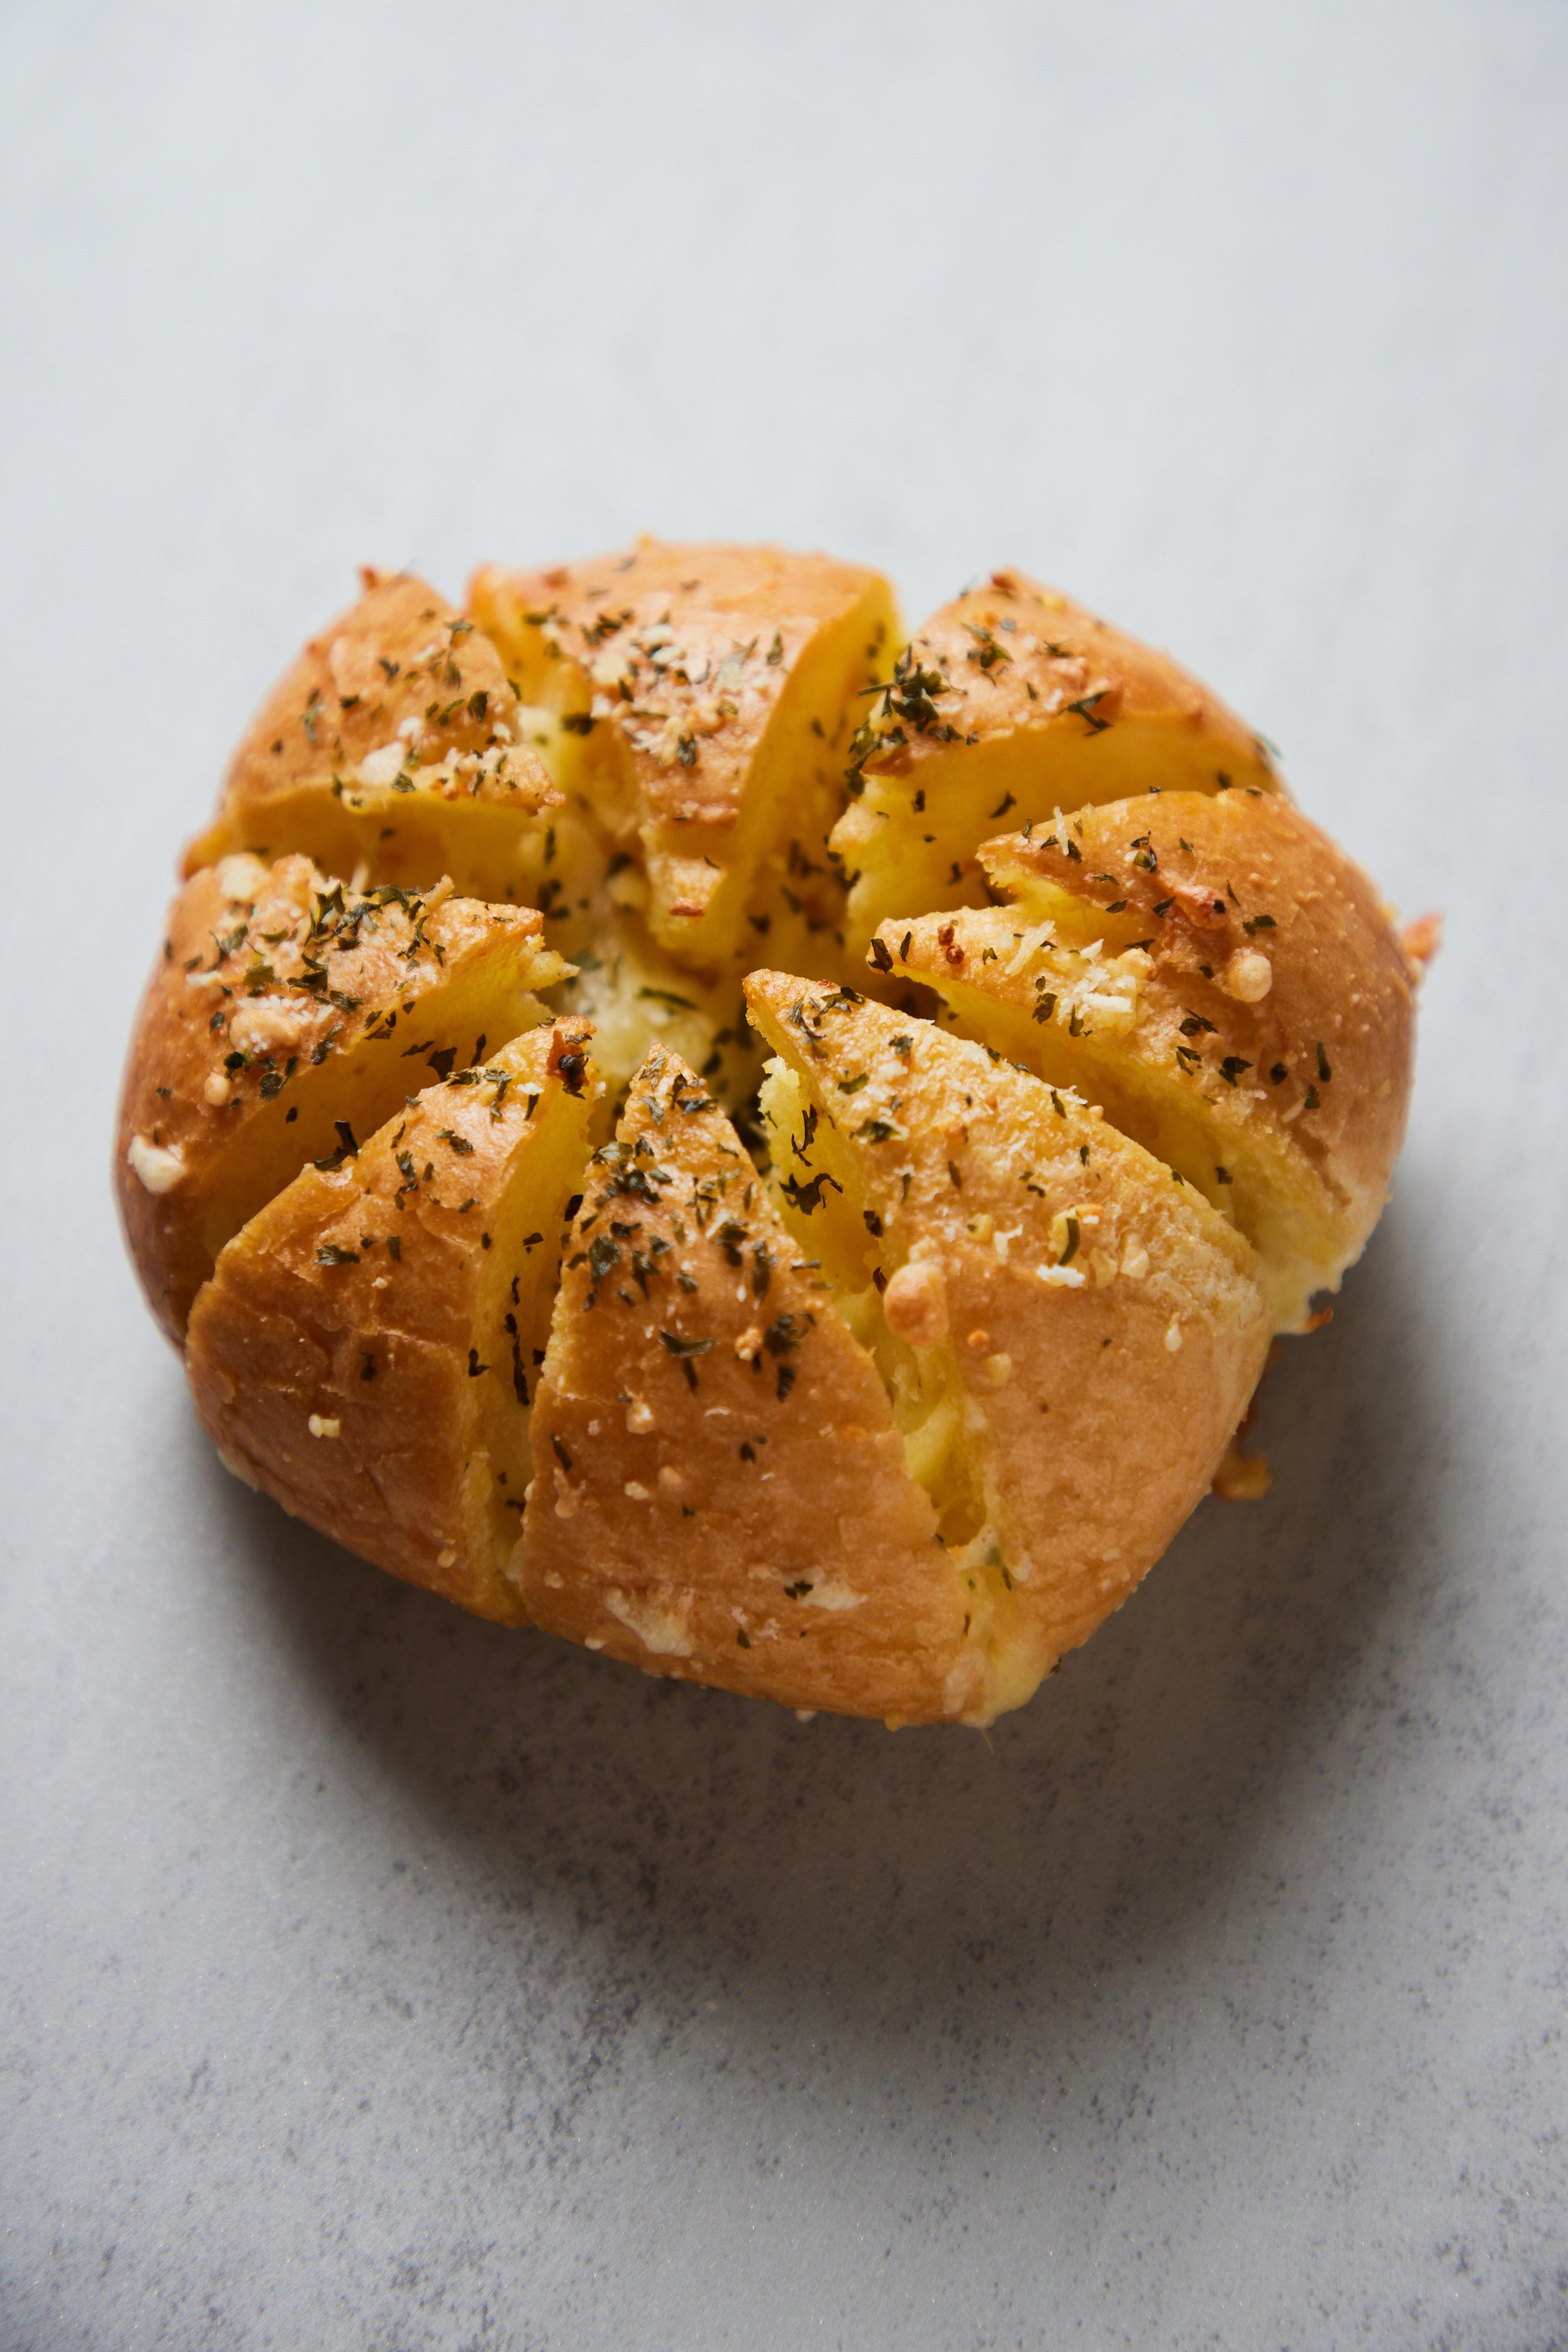 Fujisawa Garlic Bread (150g), $7 (8 DAYS Pick!)